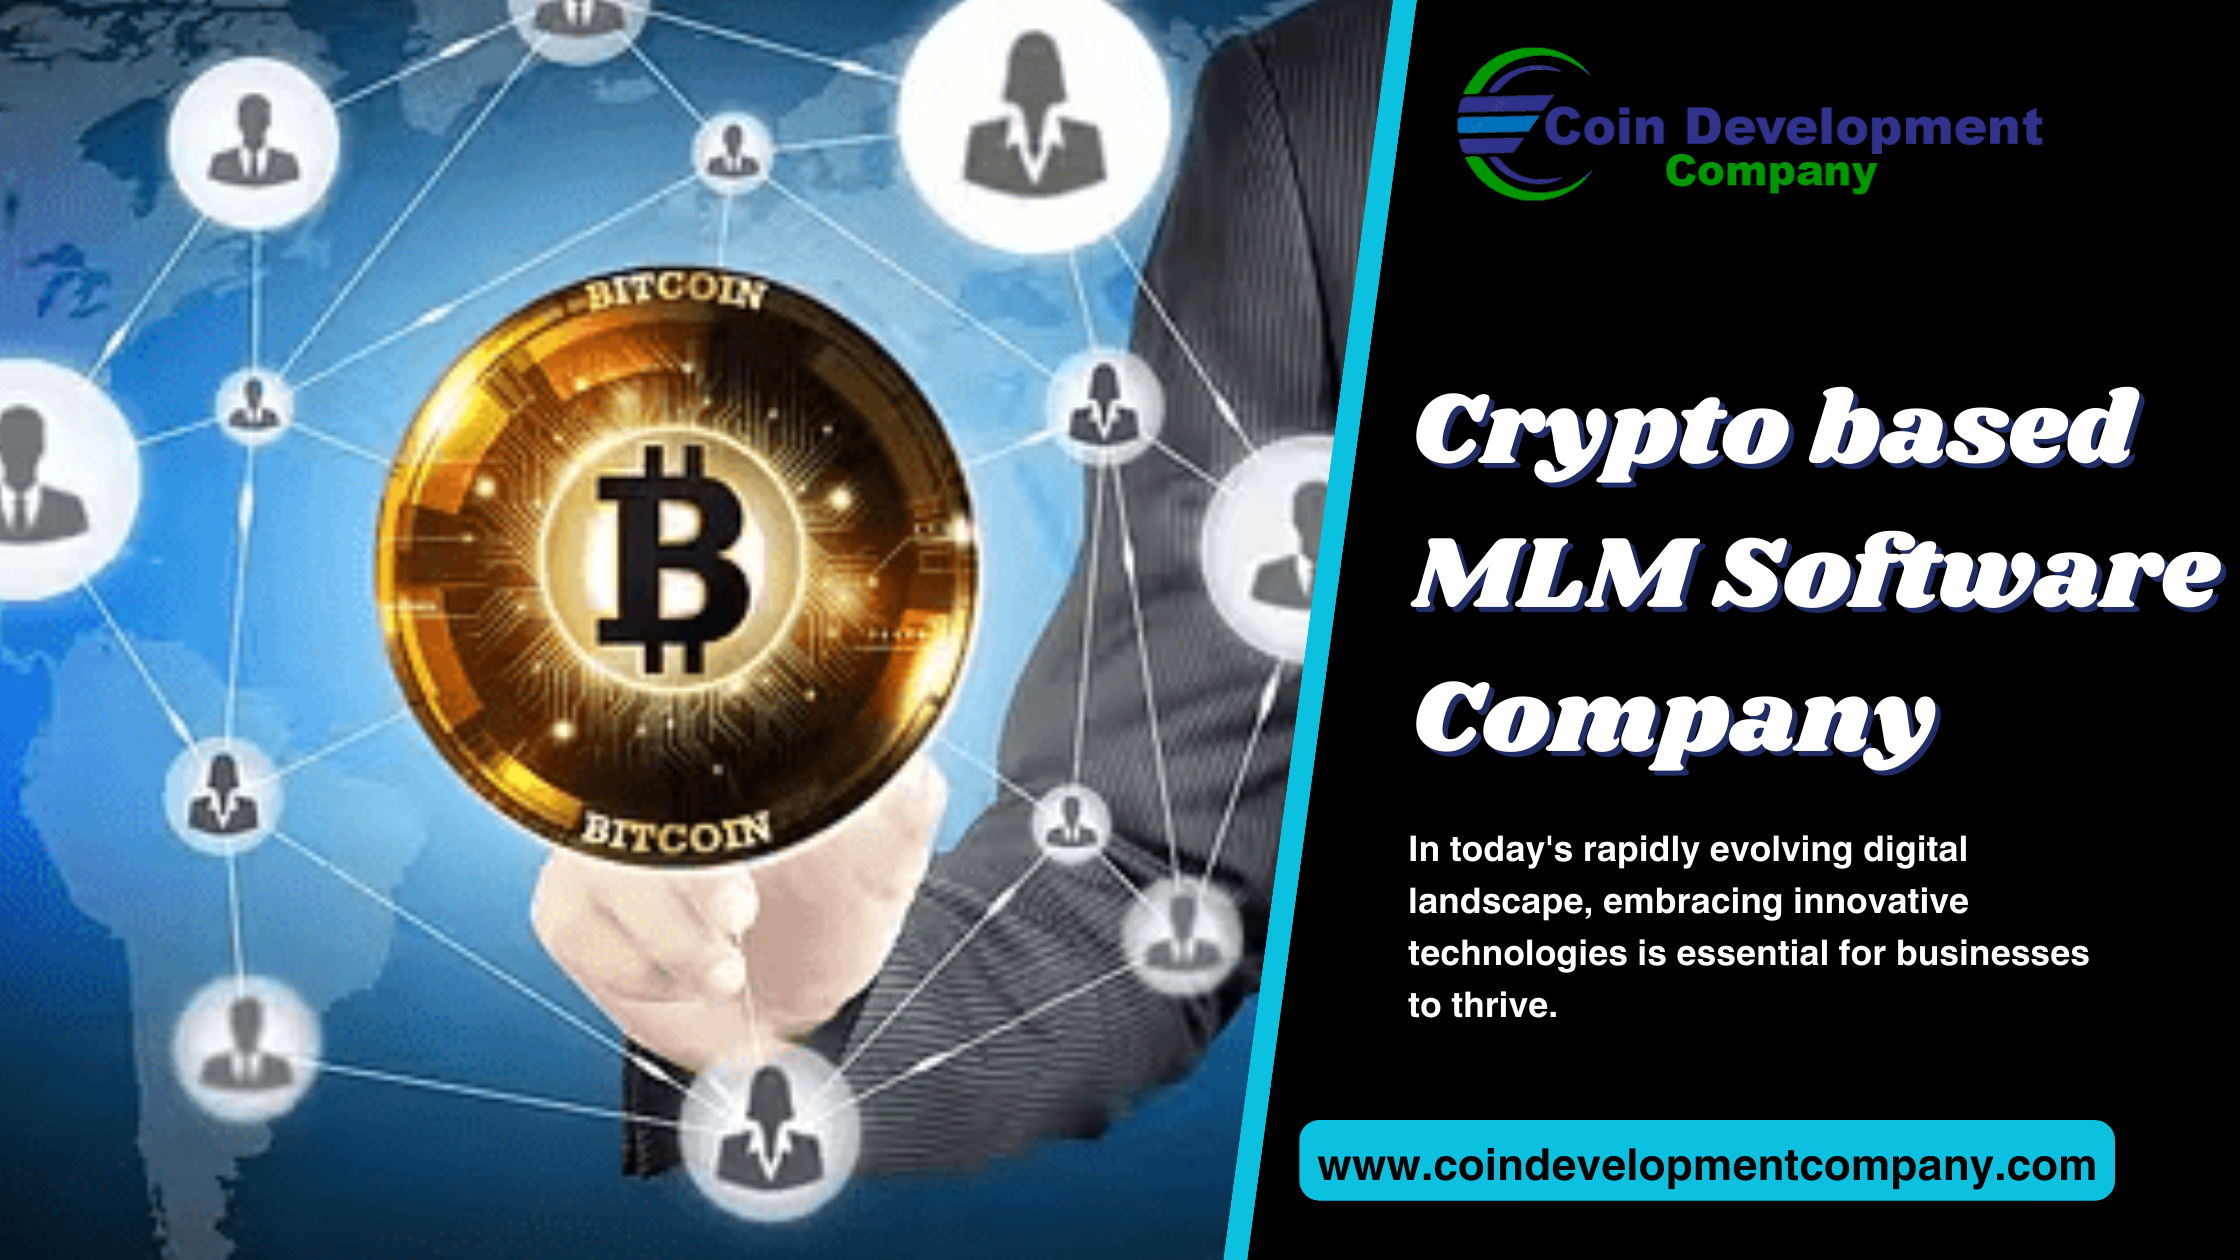 Crypto based MLM software company